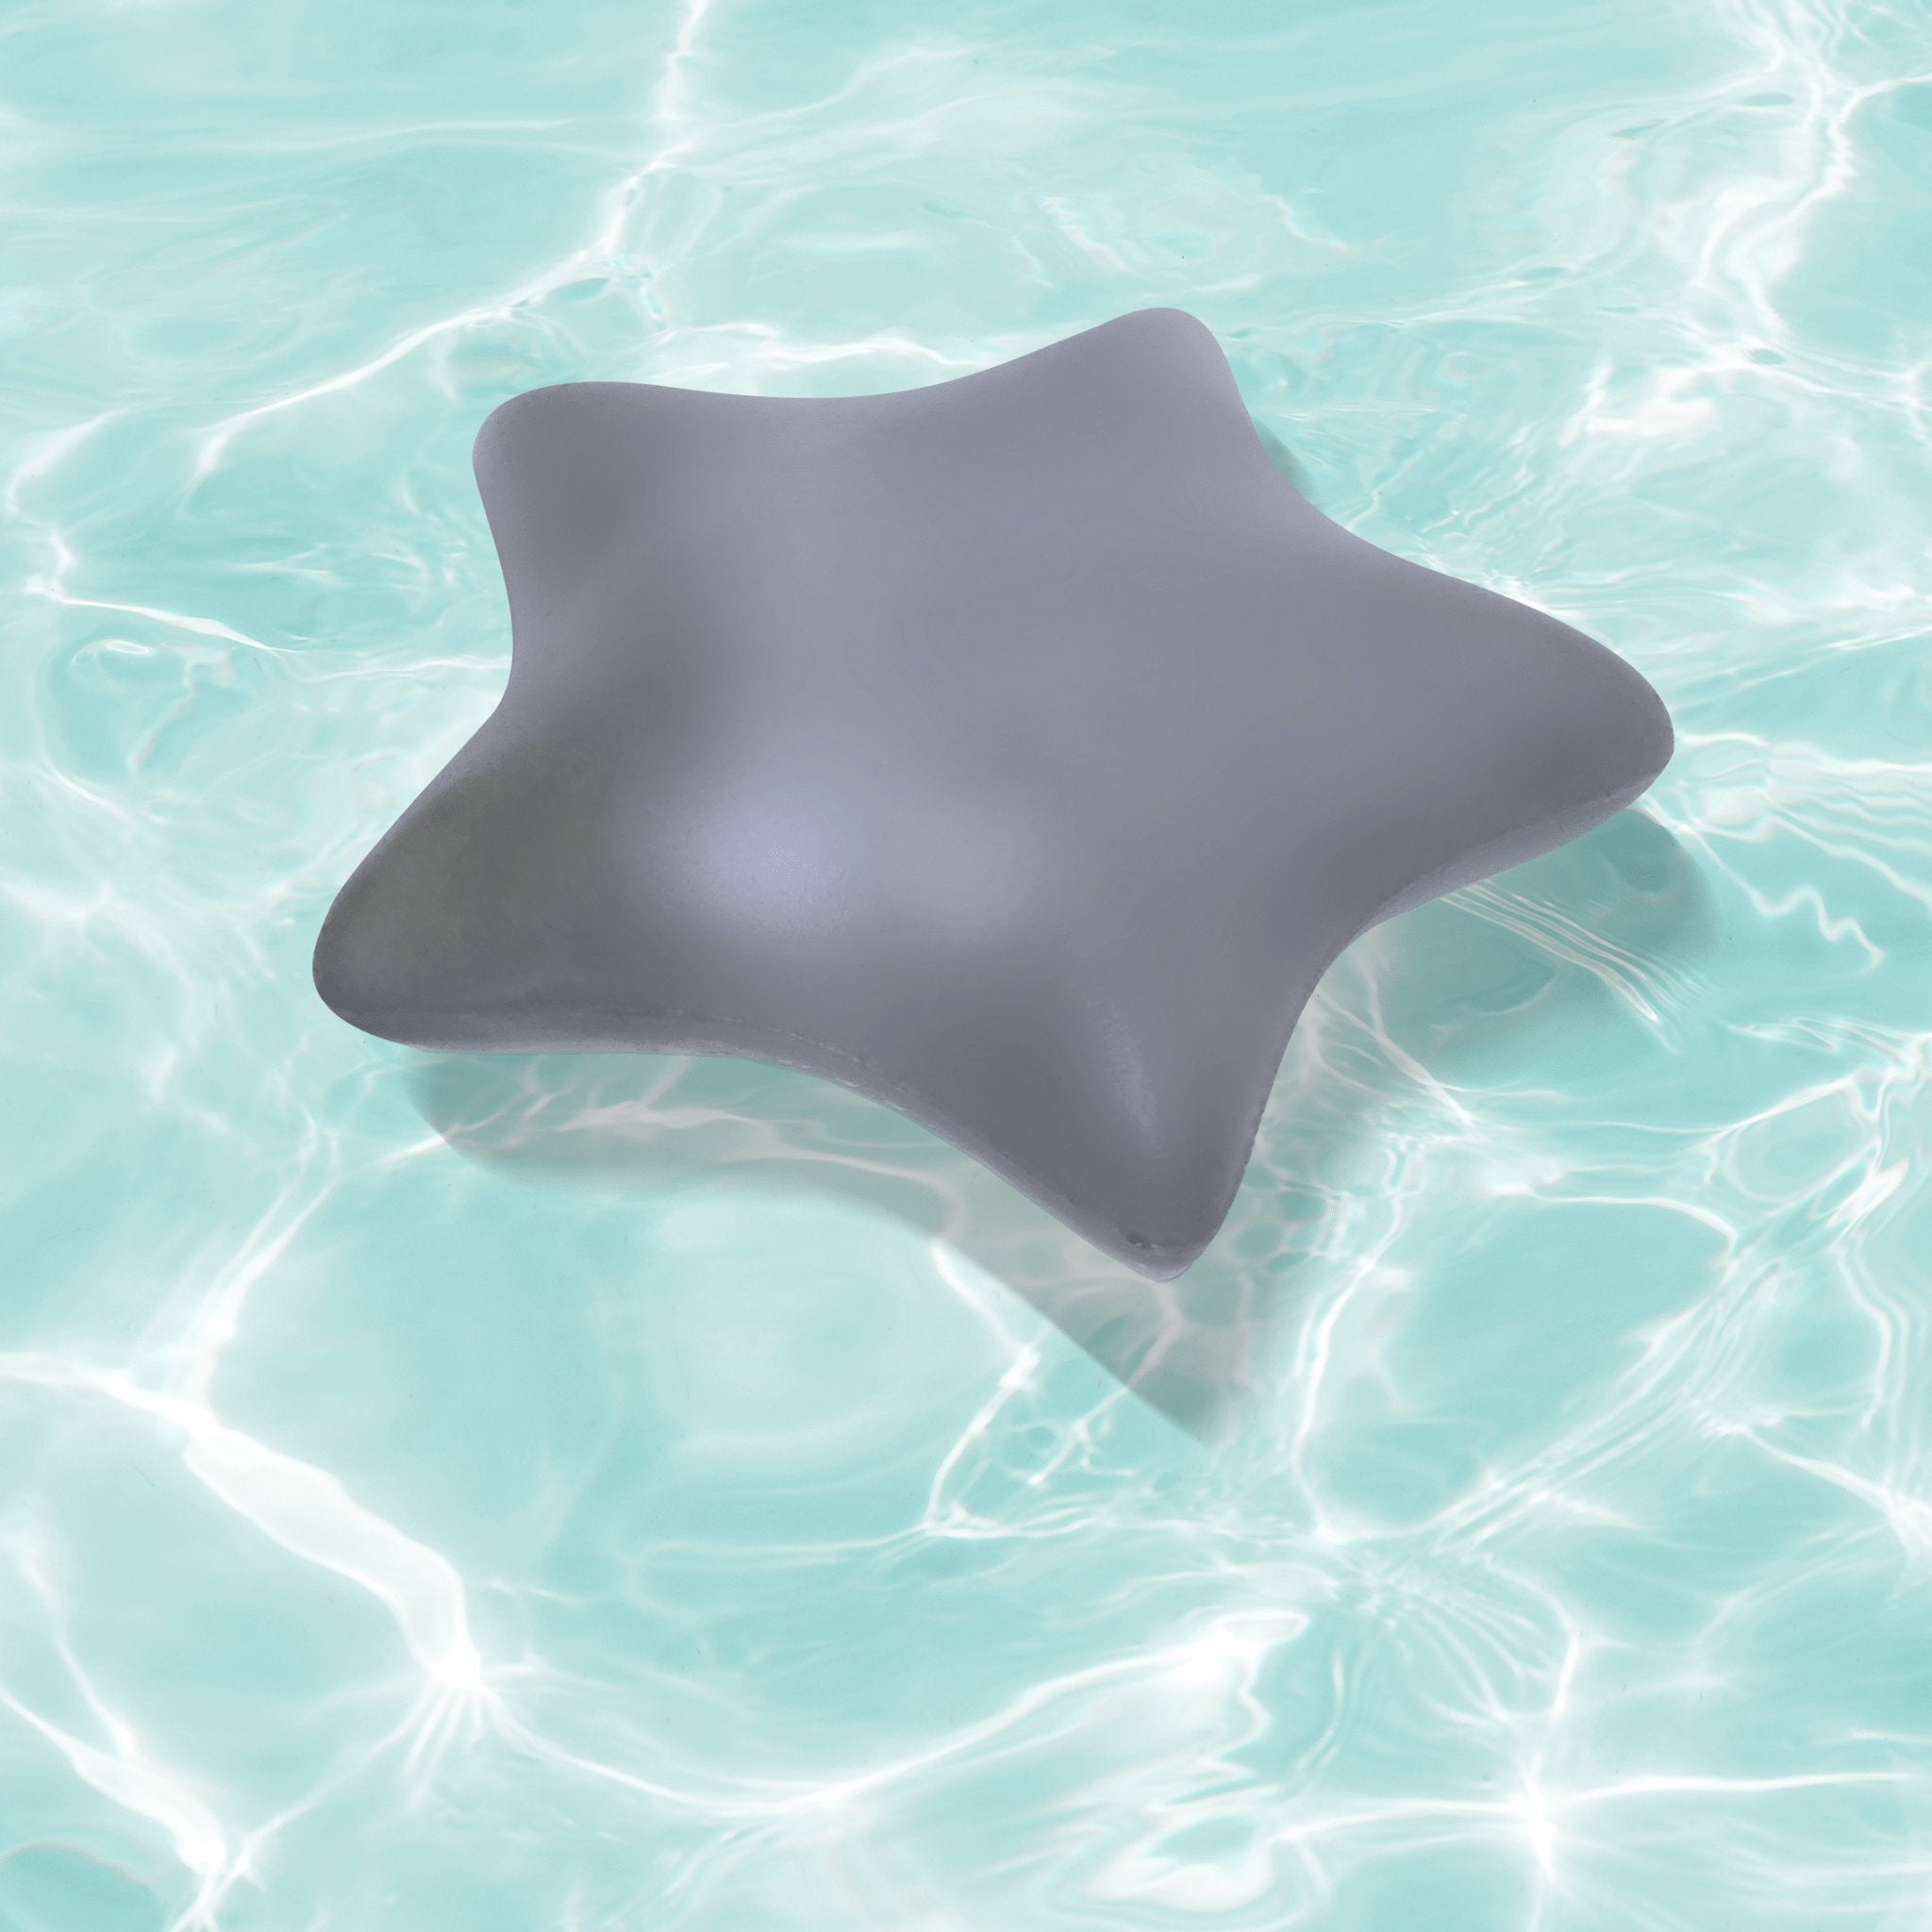 Hot Tub Cleaning Sponge | Oil-Absorbing Star Eraser - Wave Spas Inflatable, foam Hot Tubs